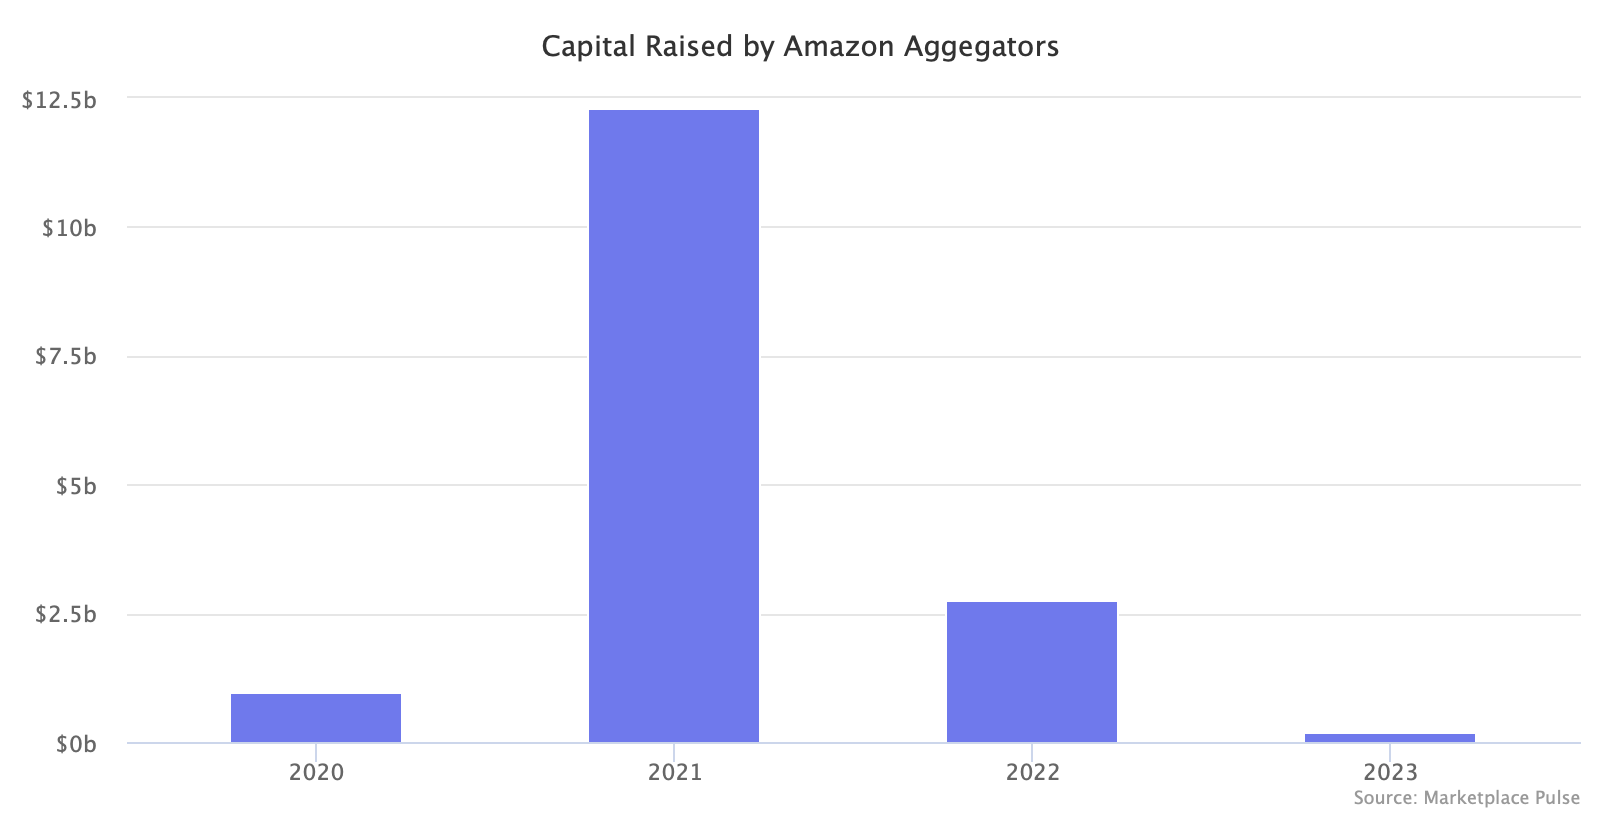 Capital Raised by Amazon Aggregators